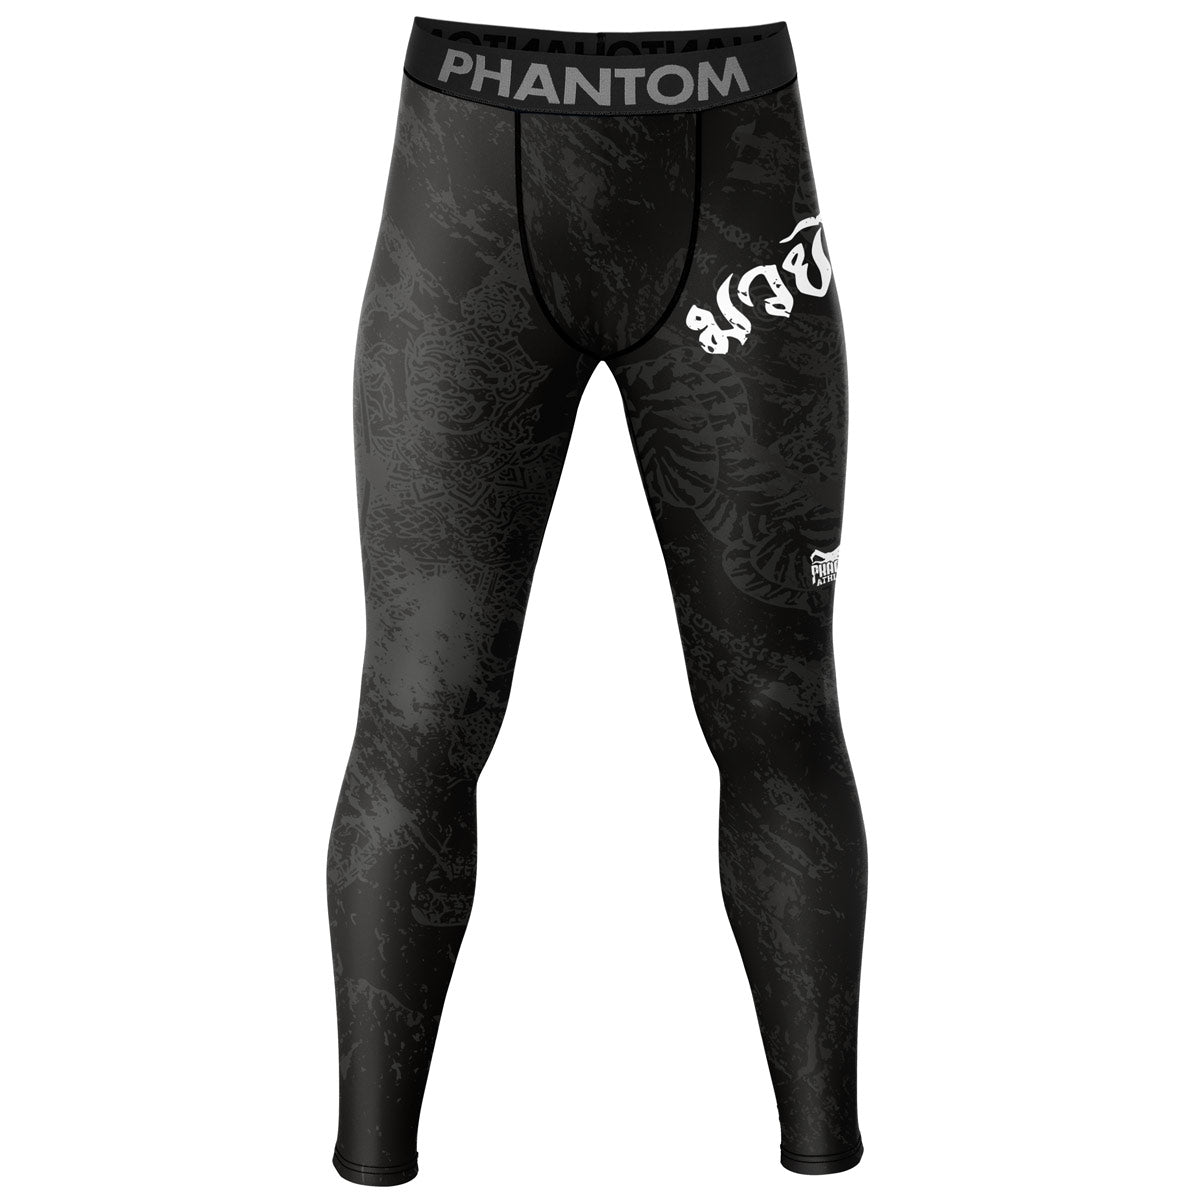 Phantom muay thai combat sports leggings / tights | training 